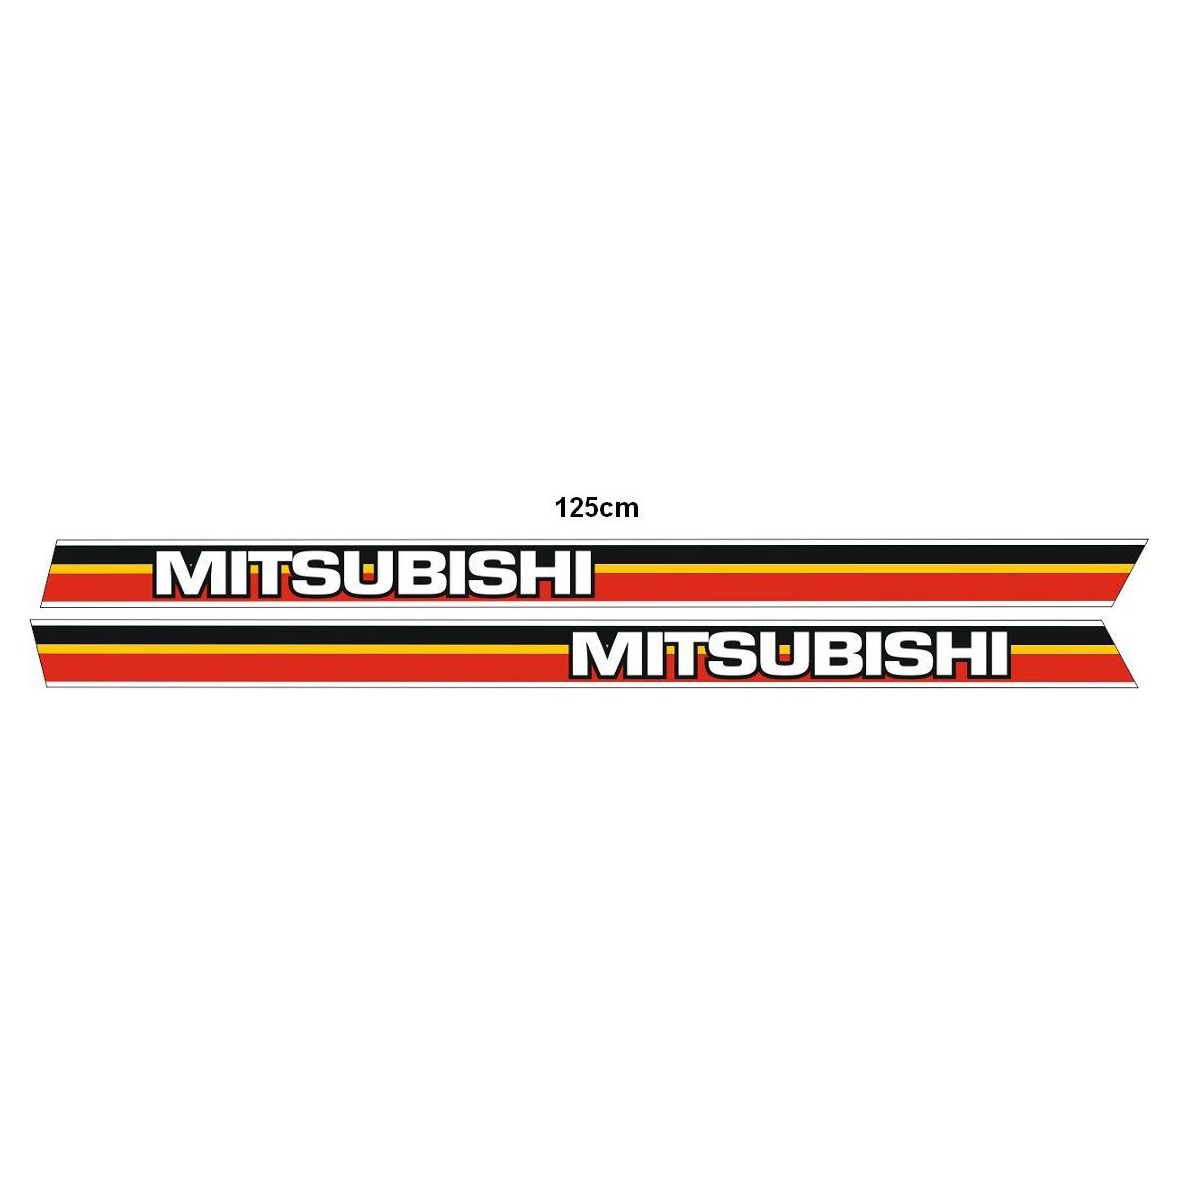 Mitsubishi 125cm stickers